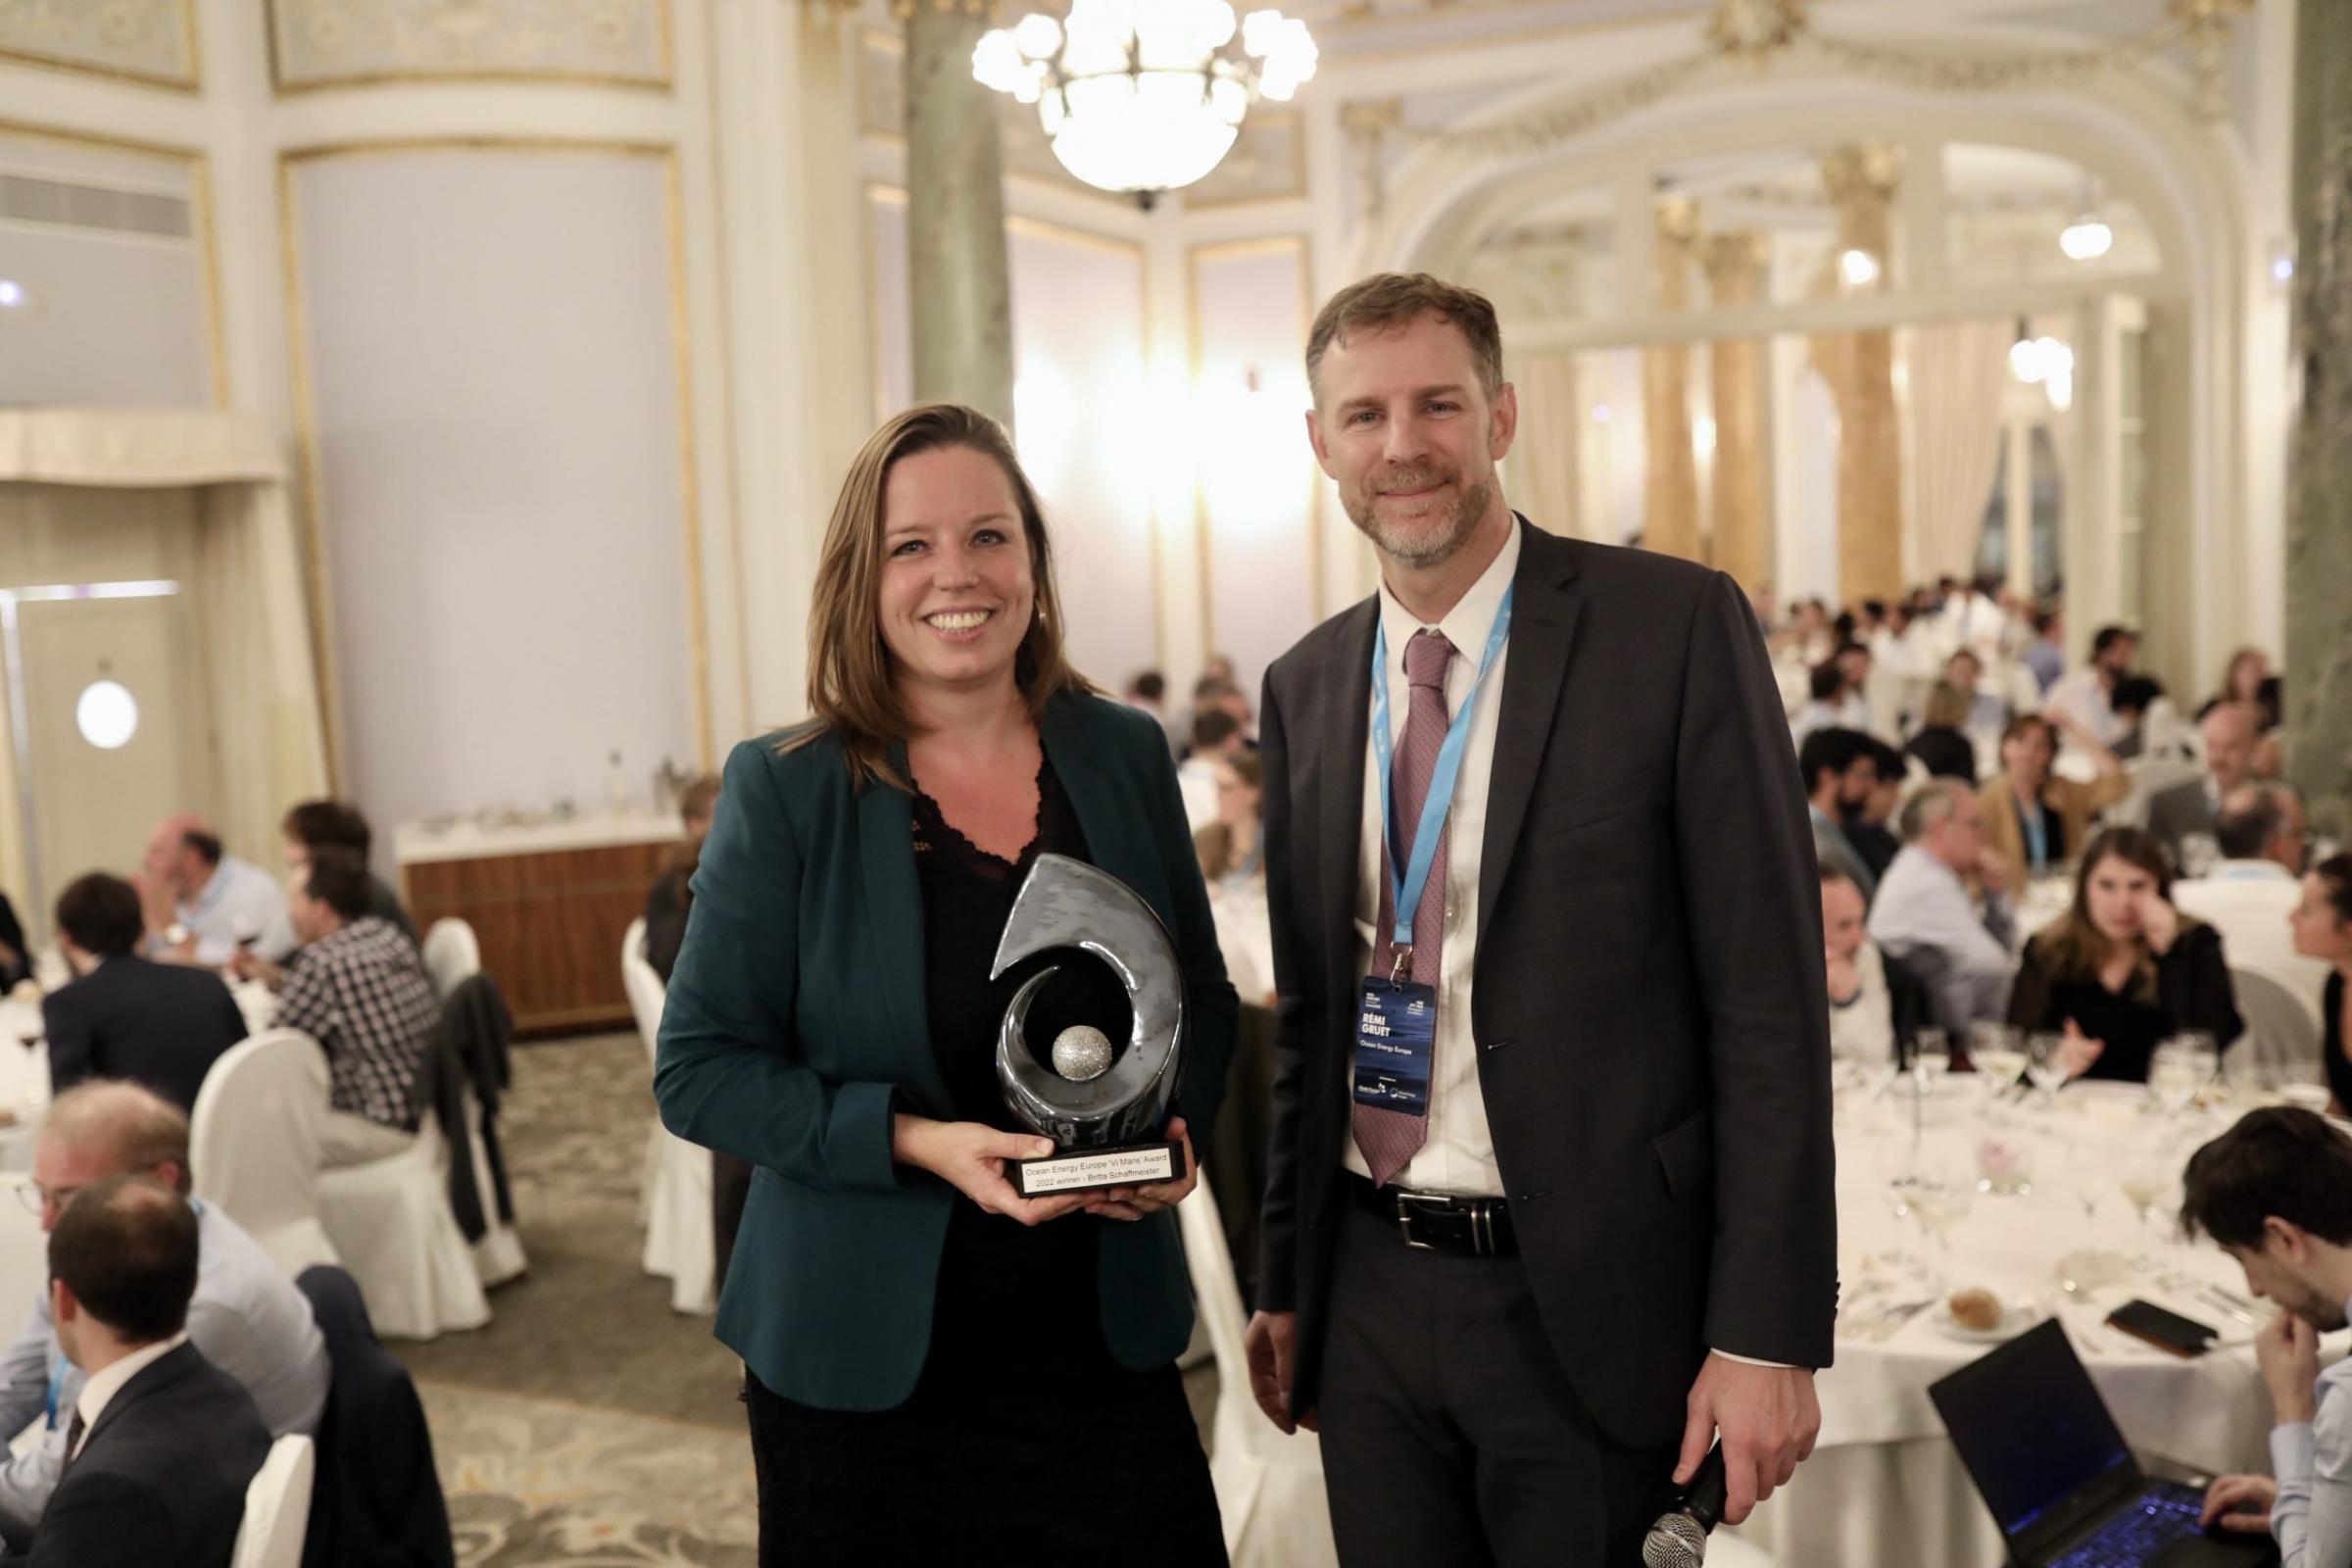 Ocean Energy Europe’s Vi Maris award presented to Britta Schaffmeister